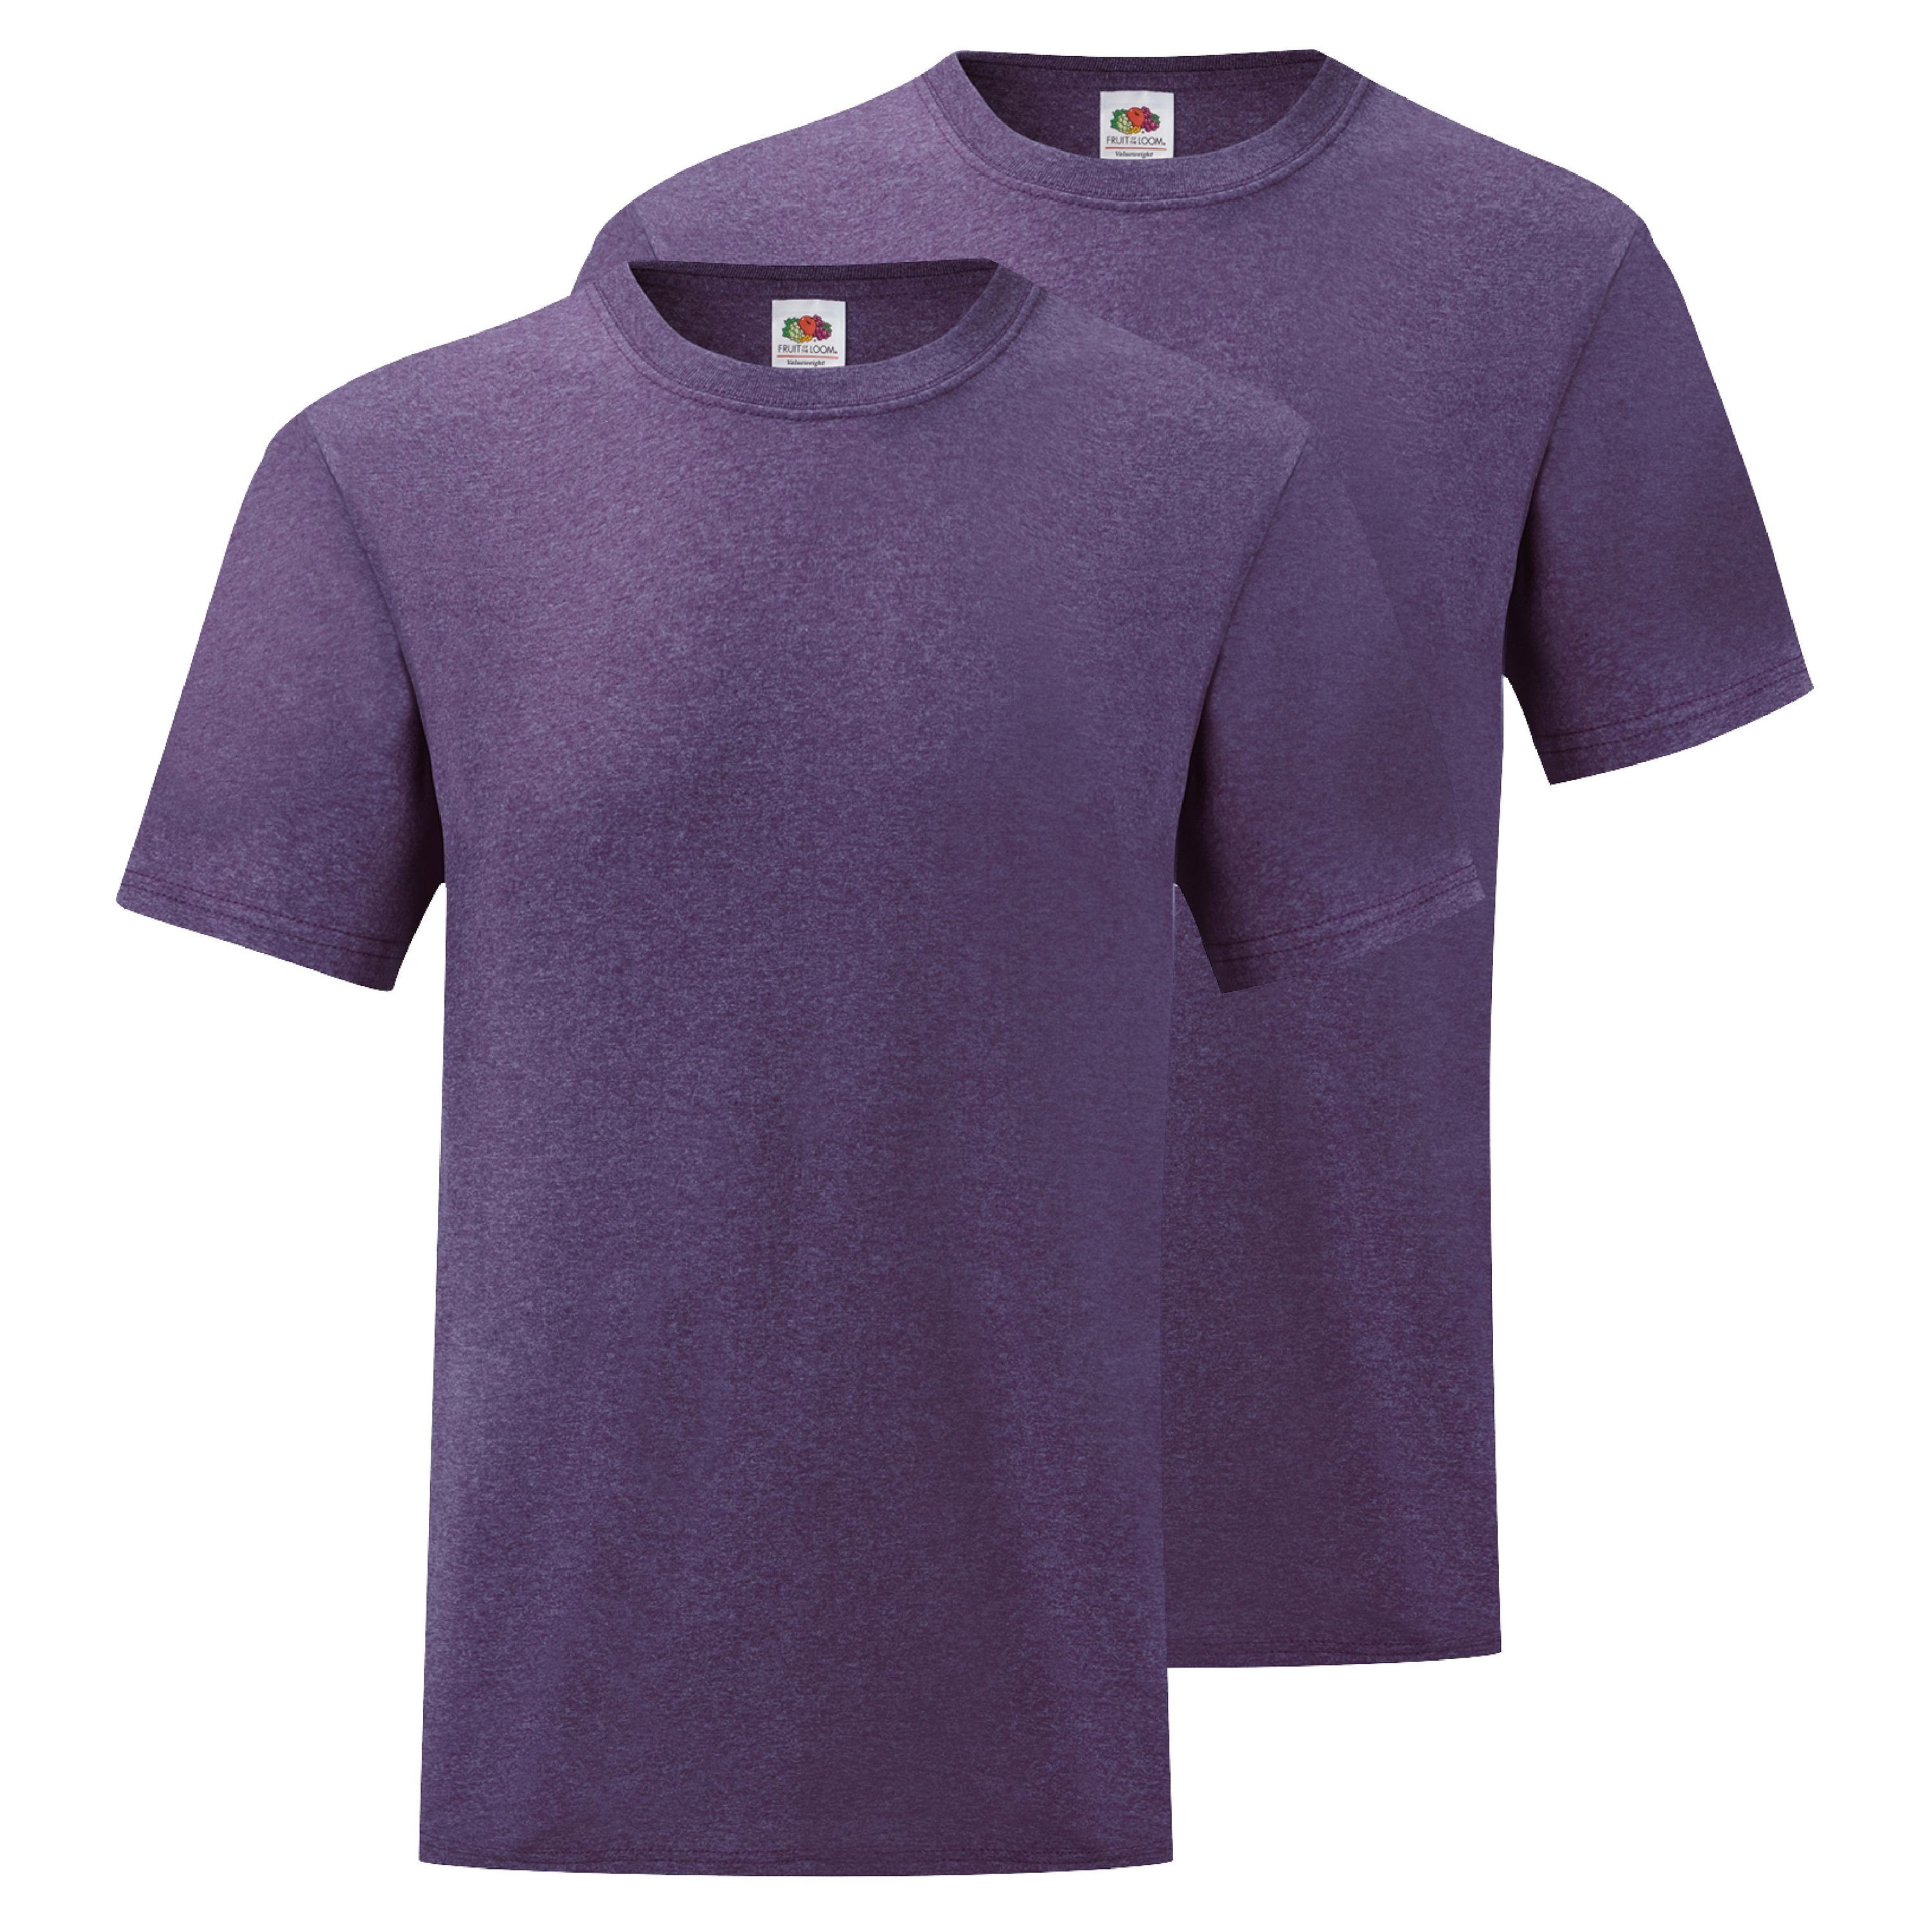 of the violett Rundhalsshirt Loom Valueweight meliert Fruit T-Shirt